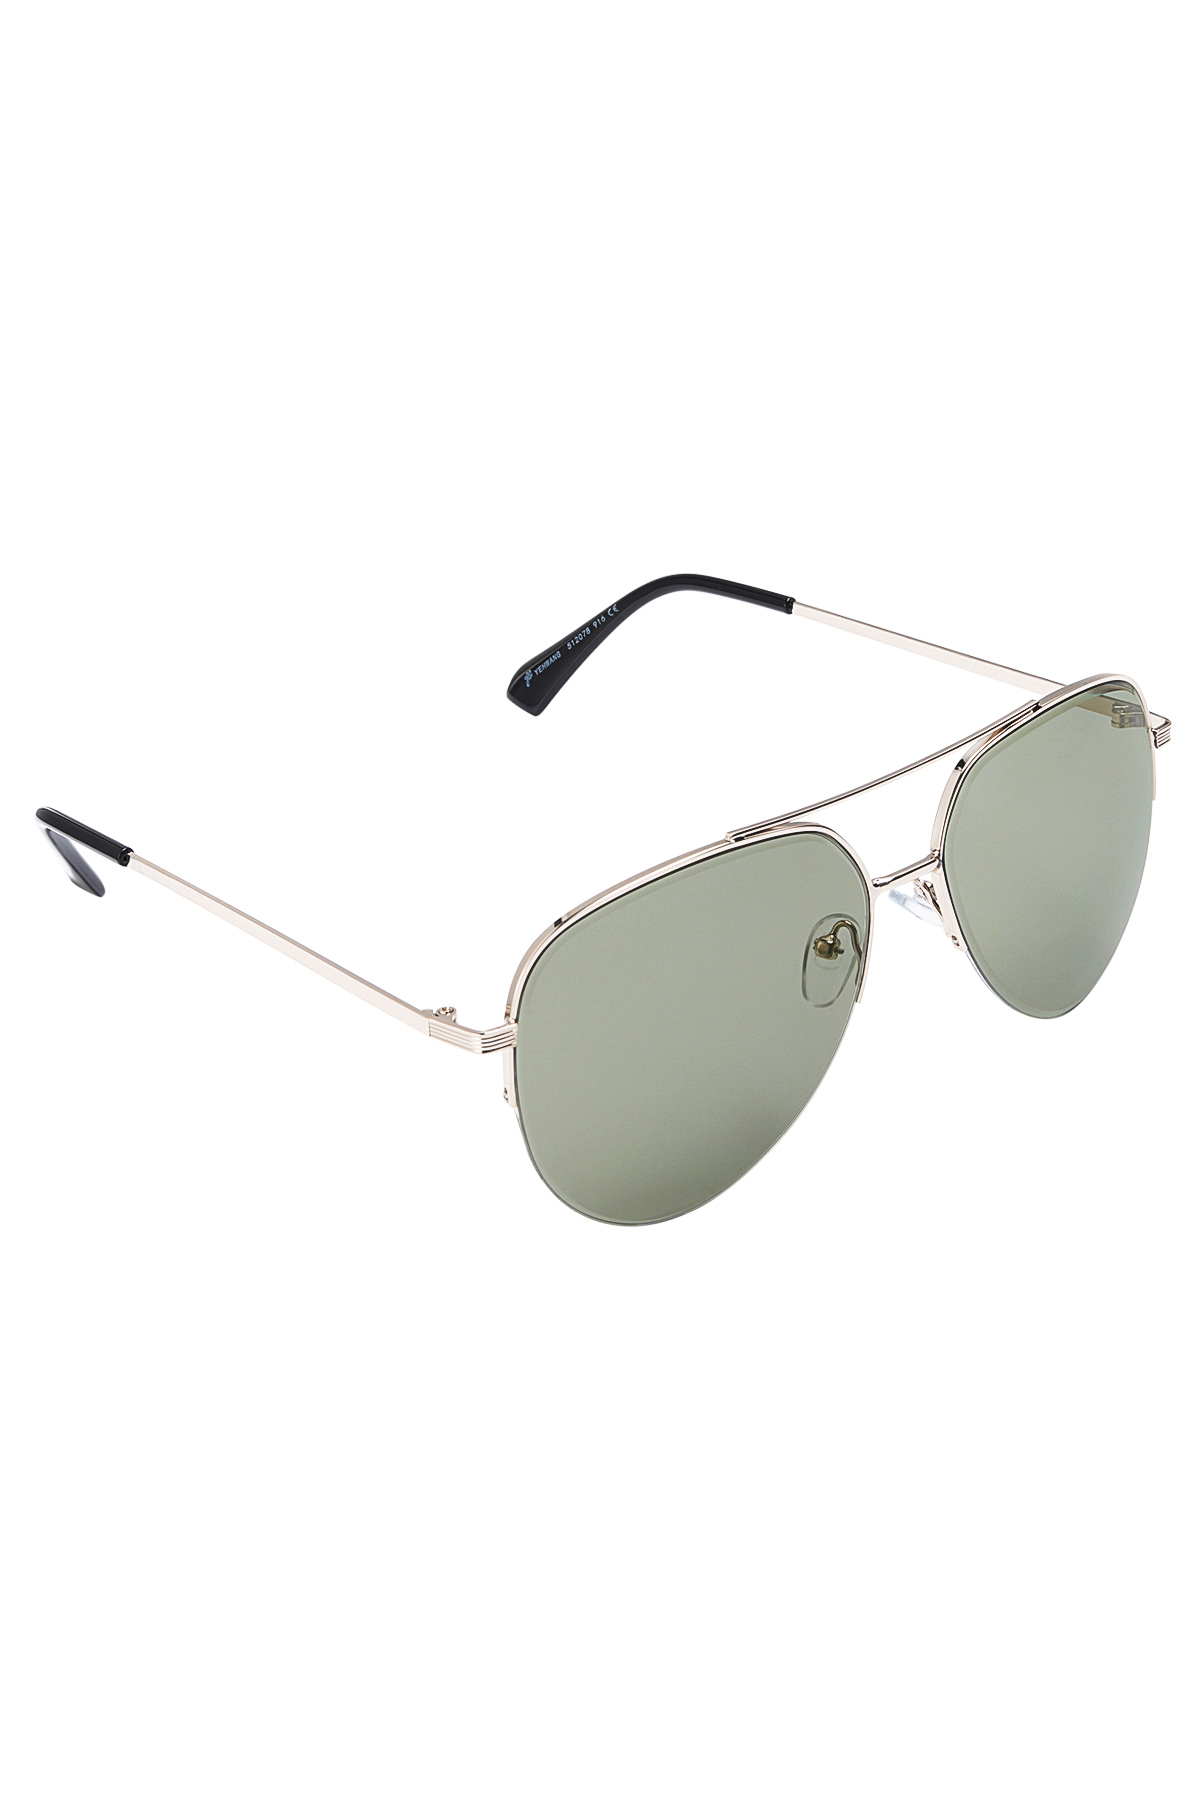 Aviator style sunglasses - gray gold